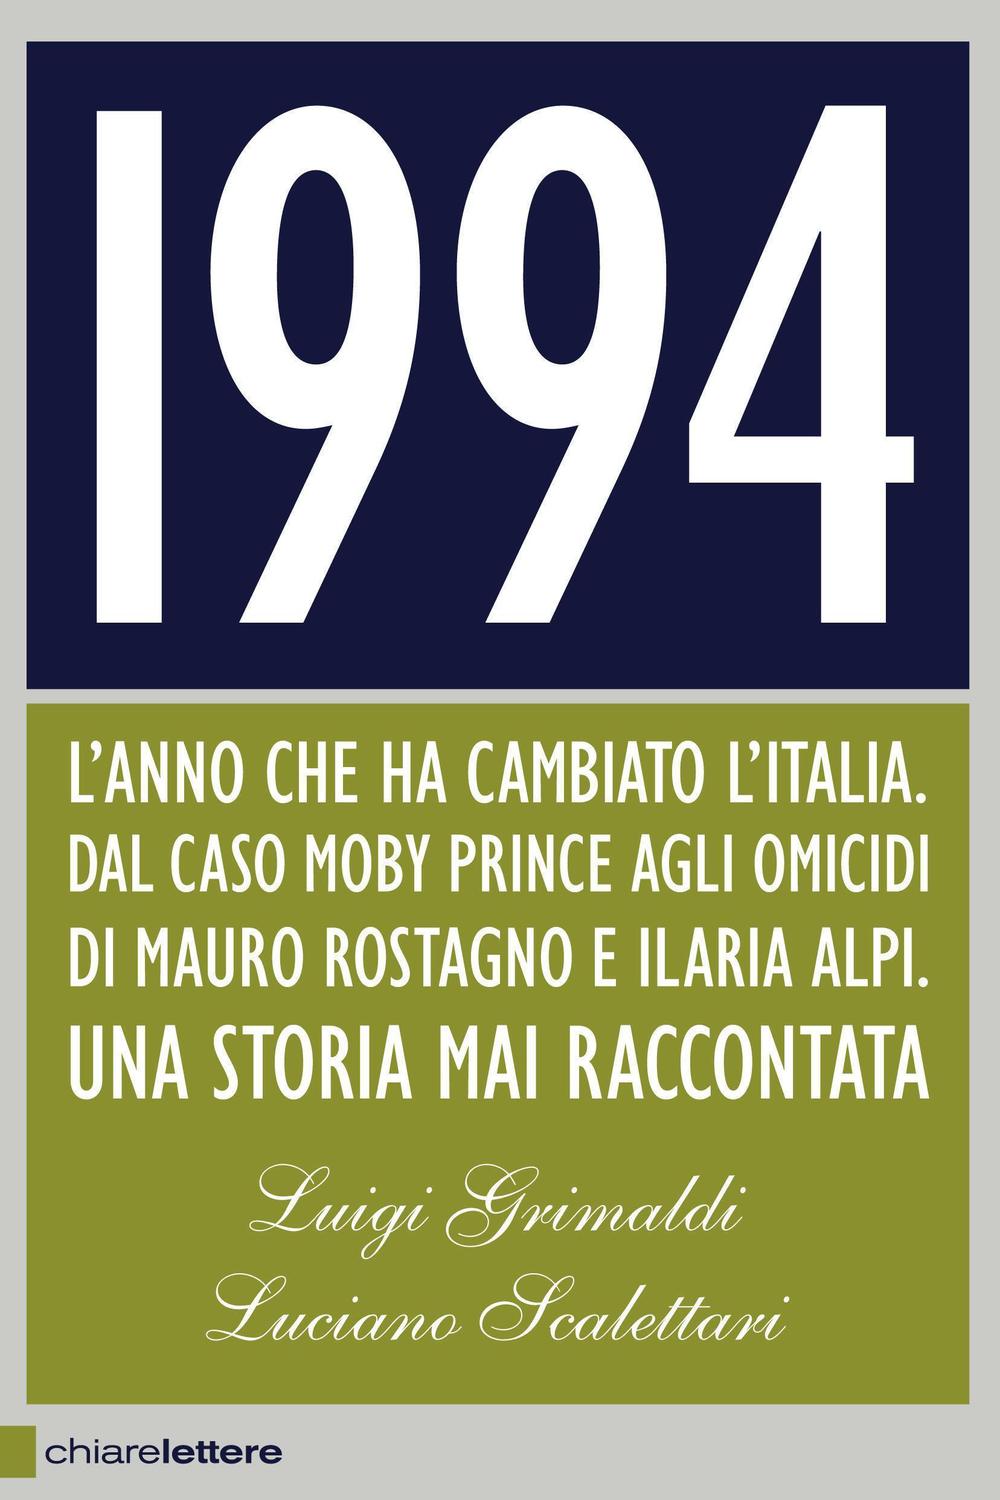 1994 - Luigi Grimaldi, Luciano Scalettari